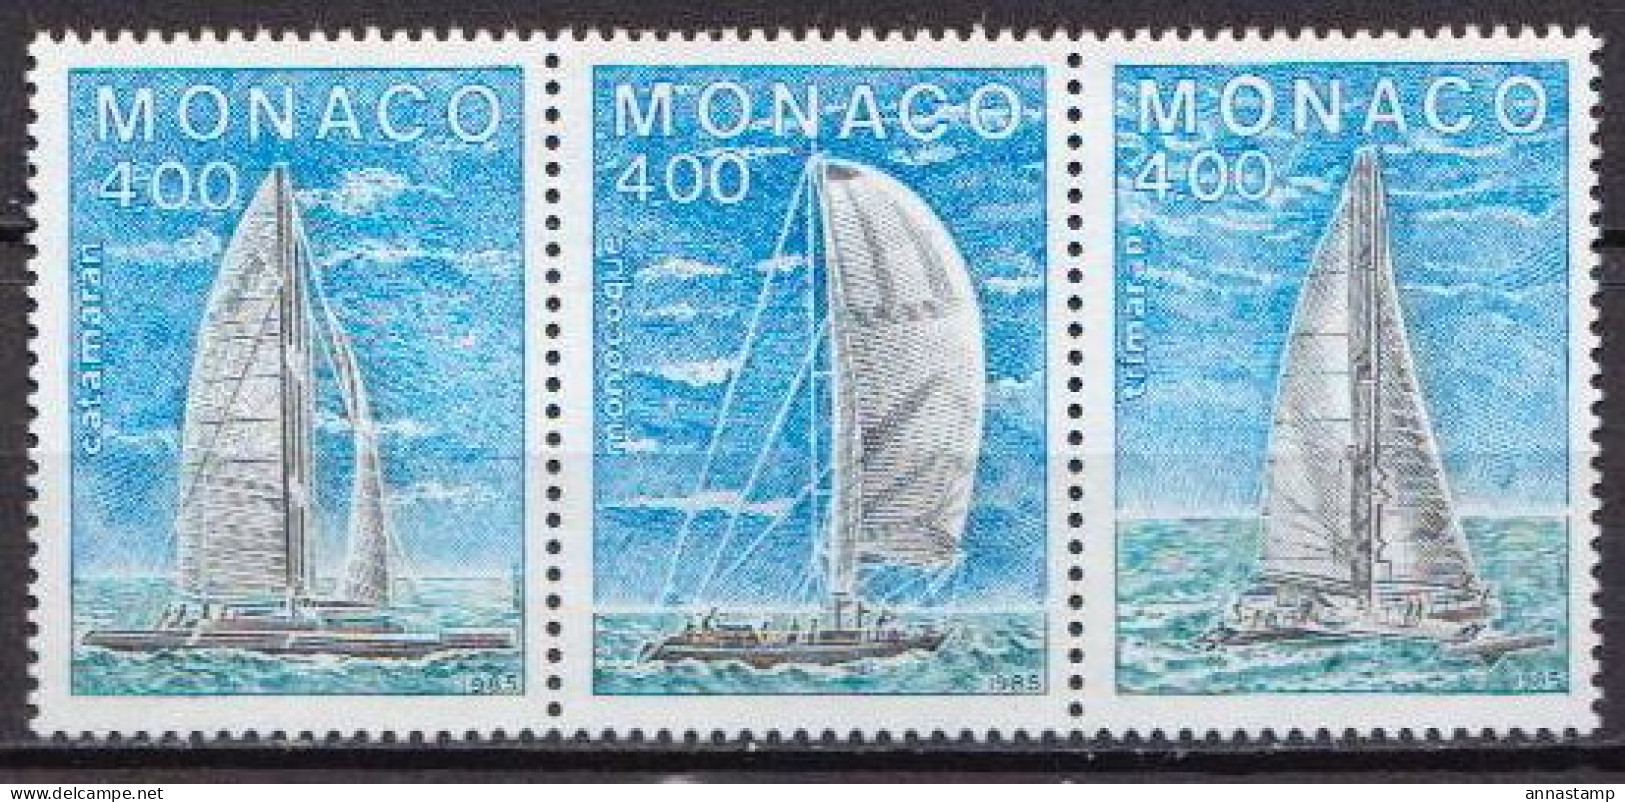 Monaco MNH Set - Sailing